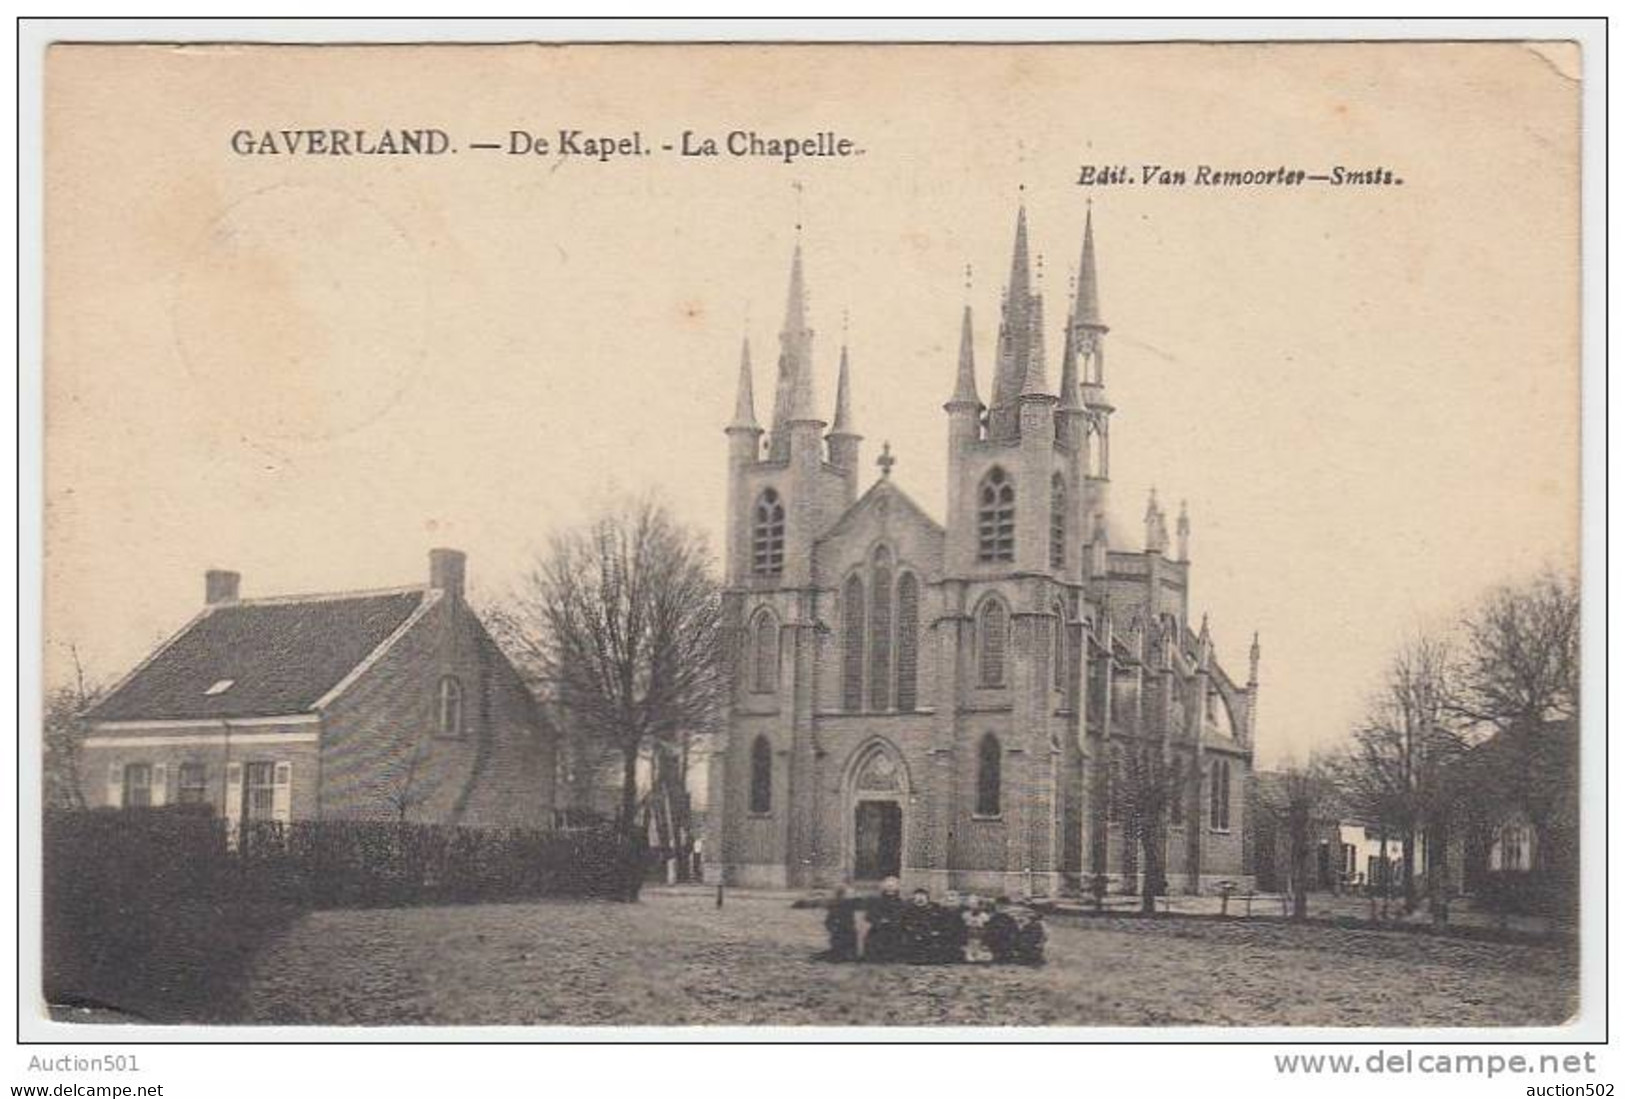 17692g De KAPEL - Chapelle - Gaverland - 1907 - Beveren-Waas